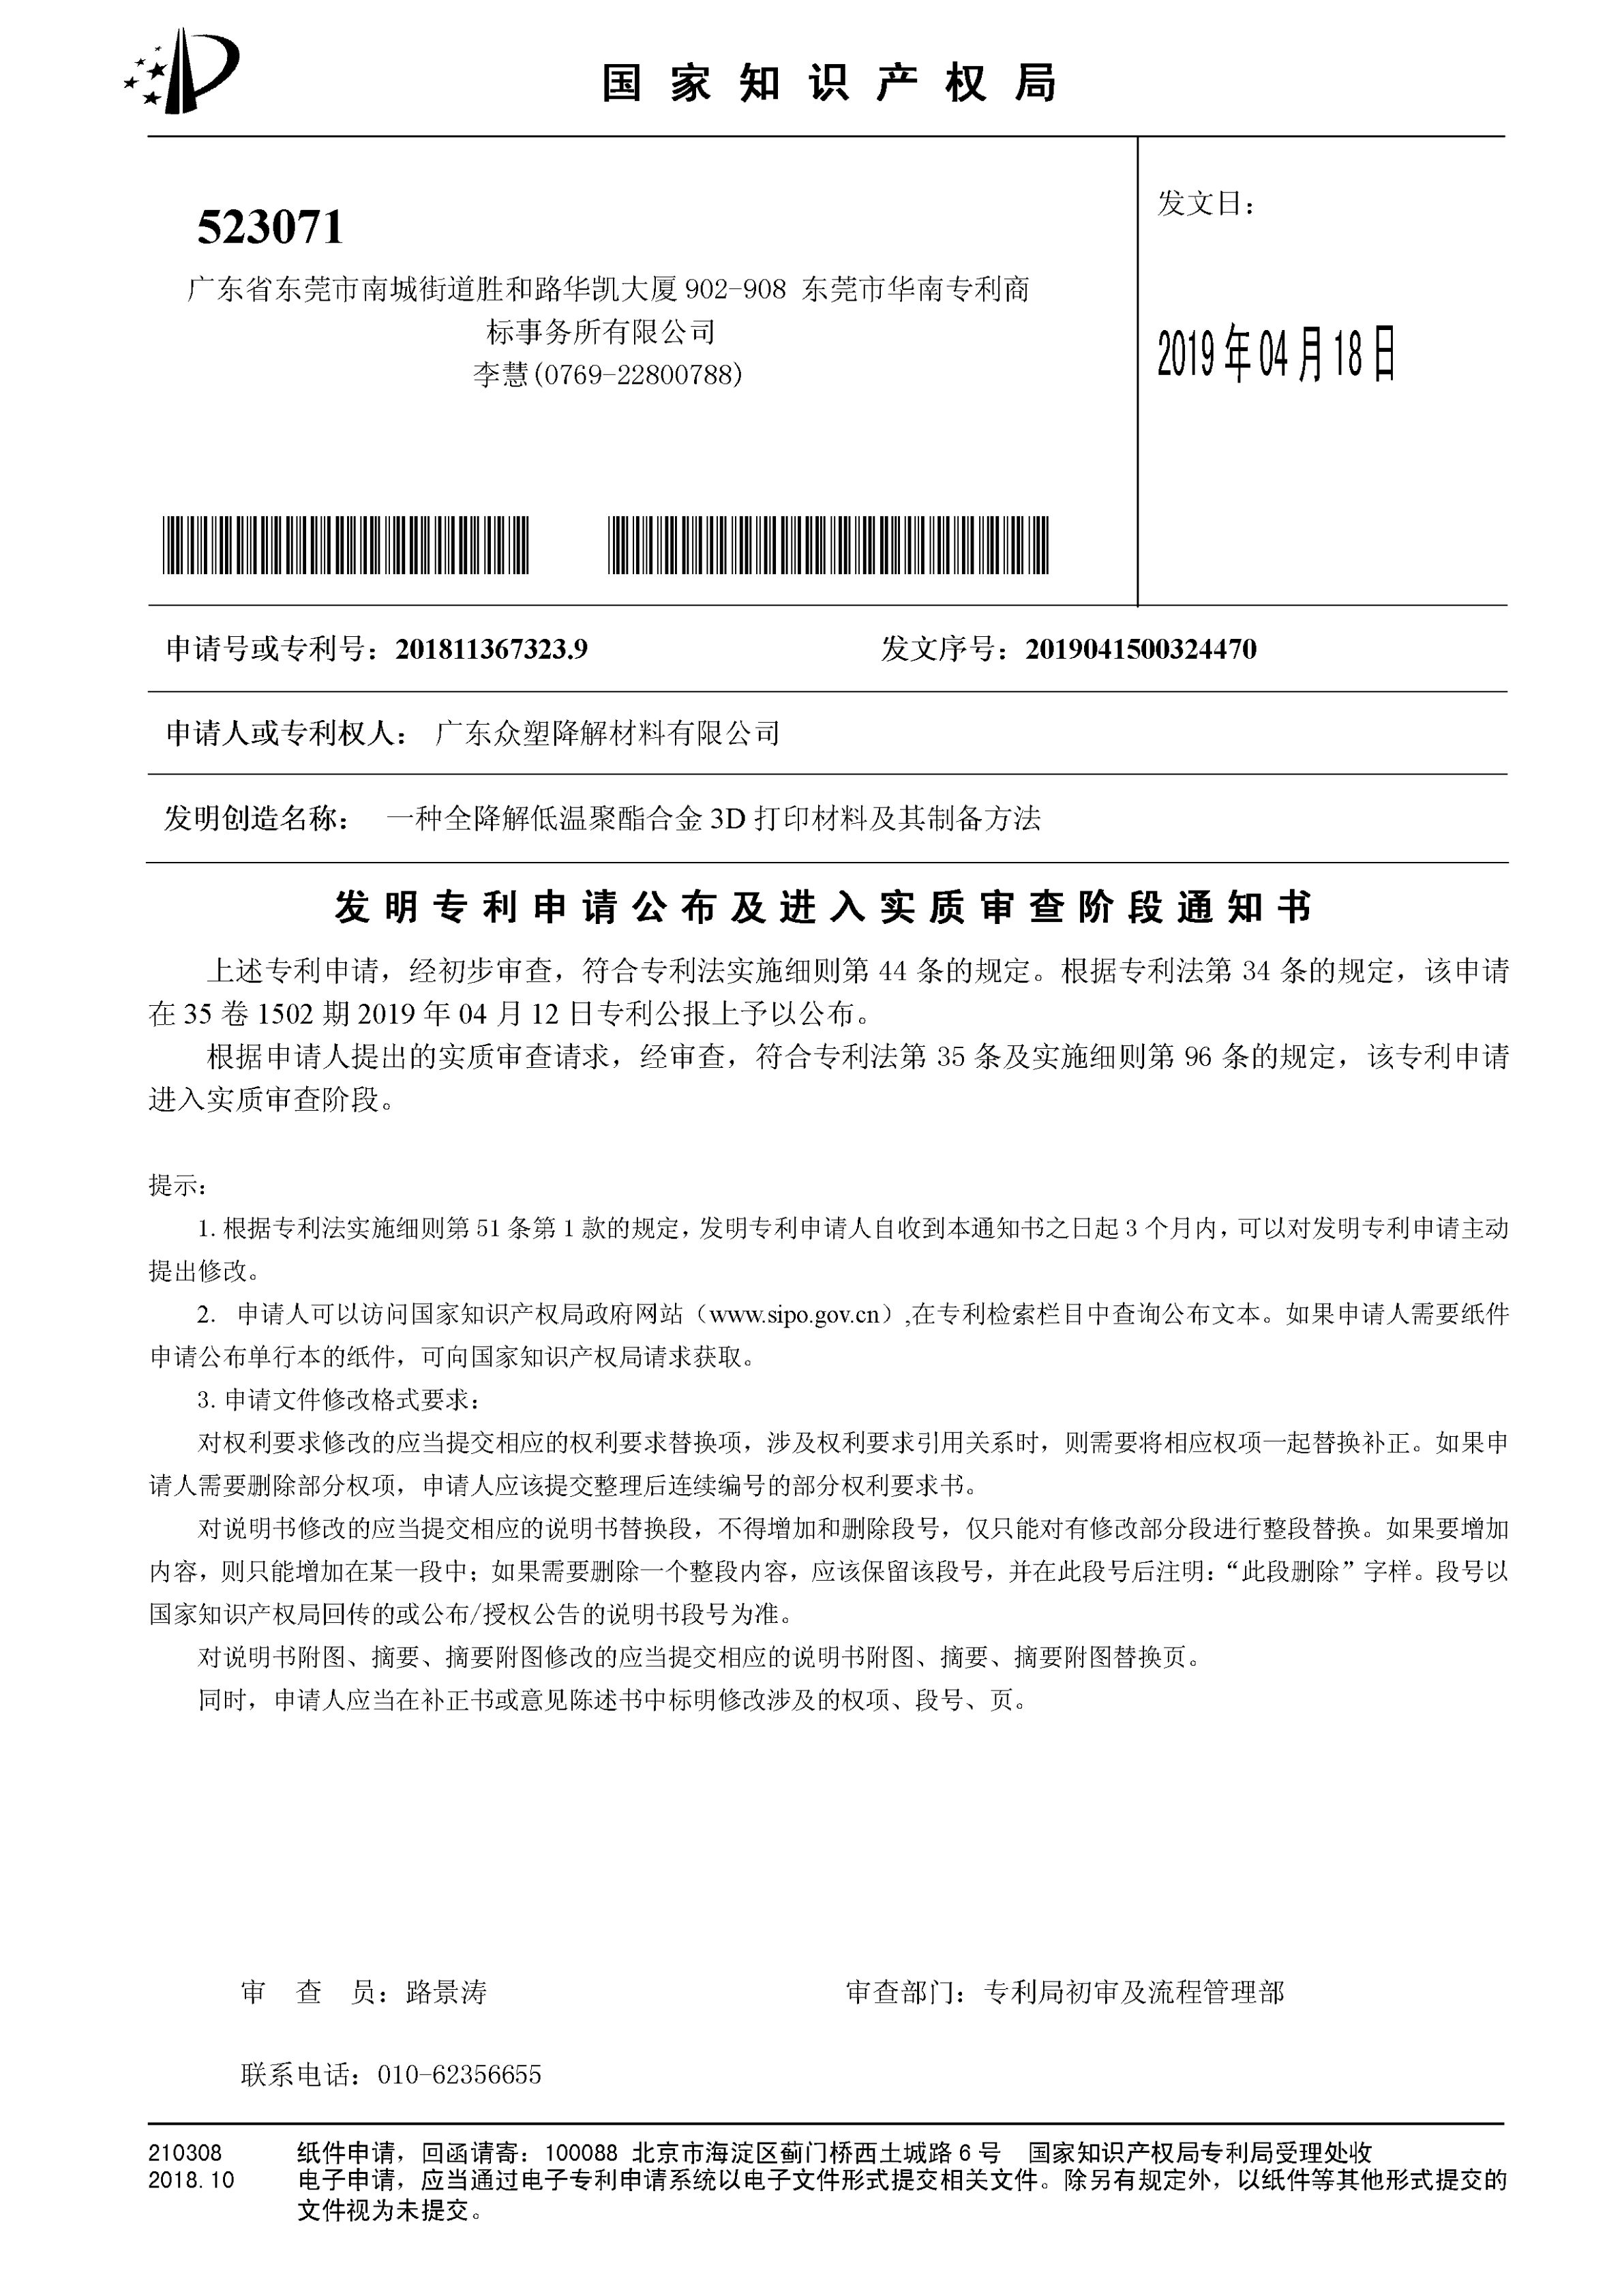 HNP18-1-6667CN发明专利申请公布及进入实质审查阶段通知书_00